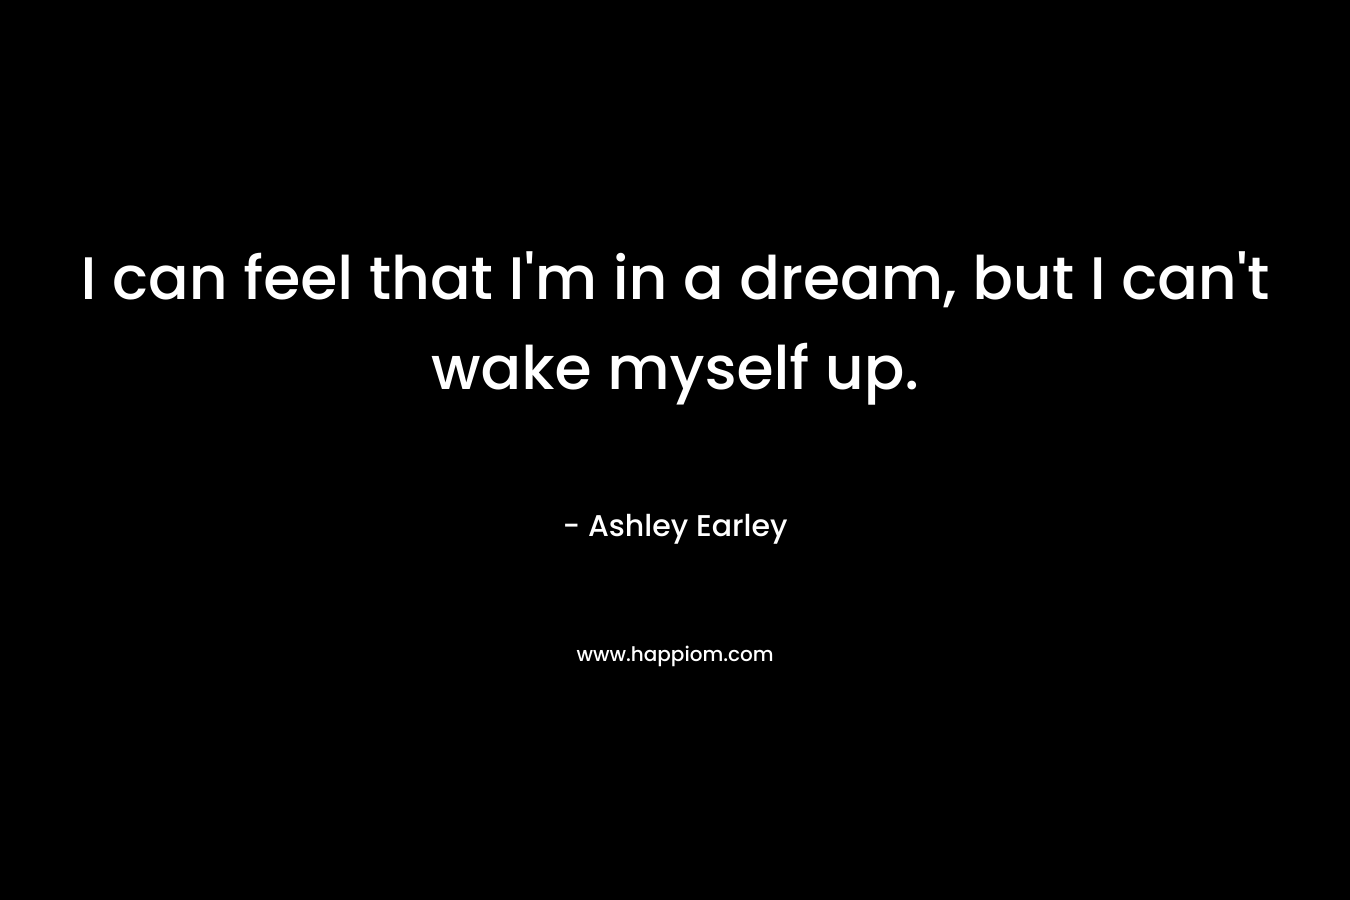 I can feel that I’m in a dream, but I can’t wake myself up. – Ashley Earley